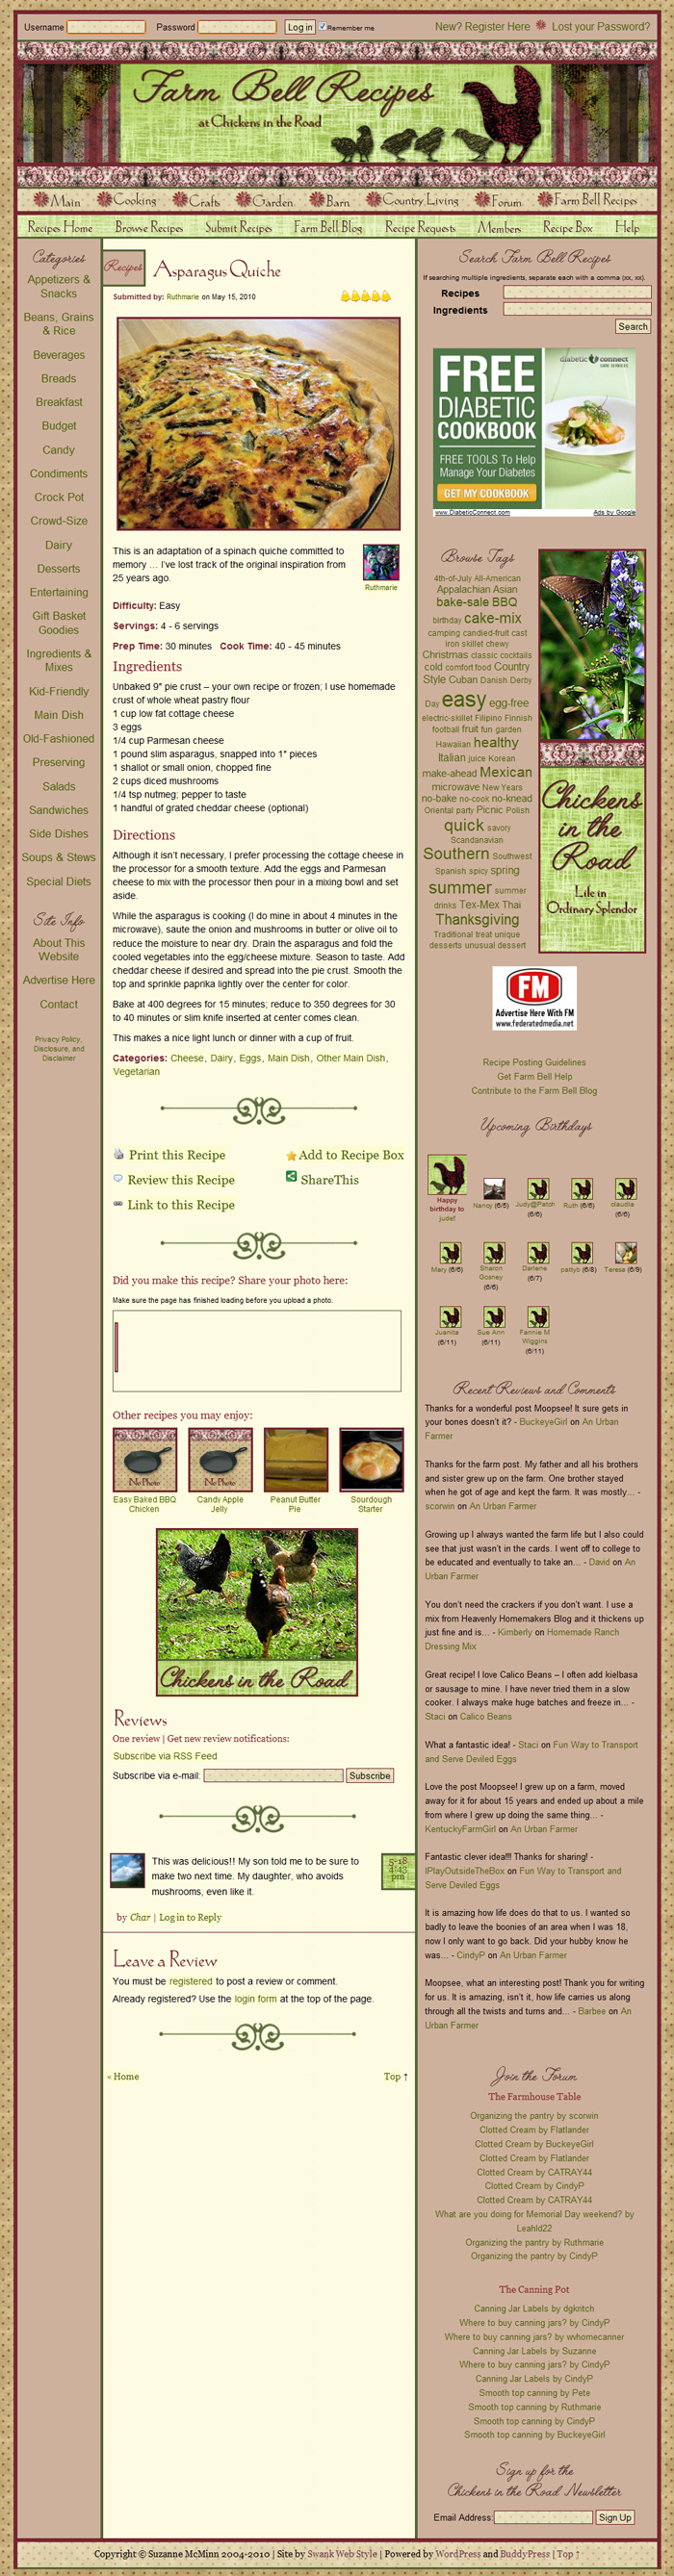 Farm Bell Recipes Recipe page